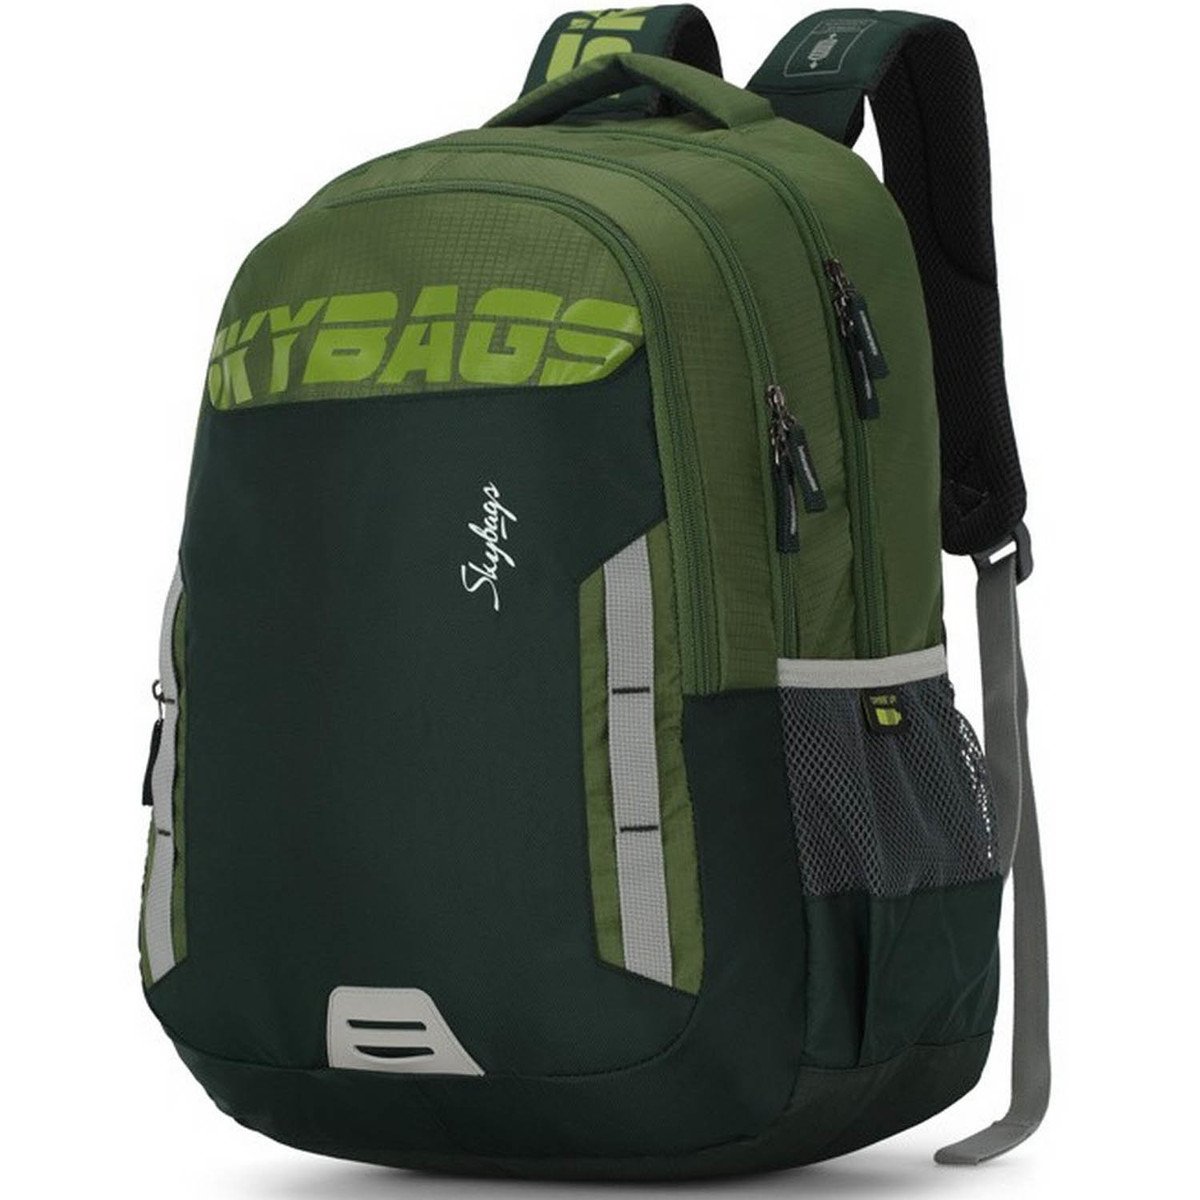 SkyBags School Back Pack Figo Extra SKBPFIGE2 Green 19inch